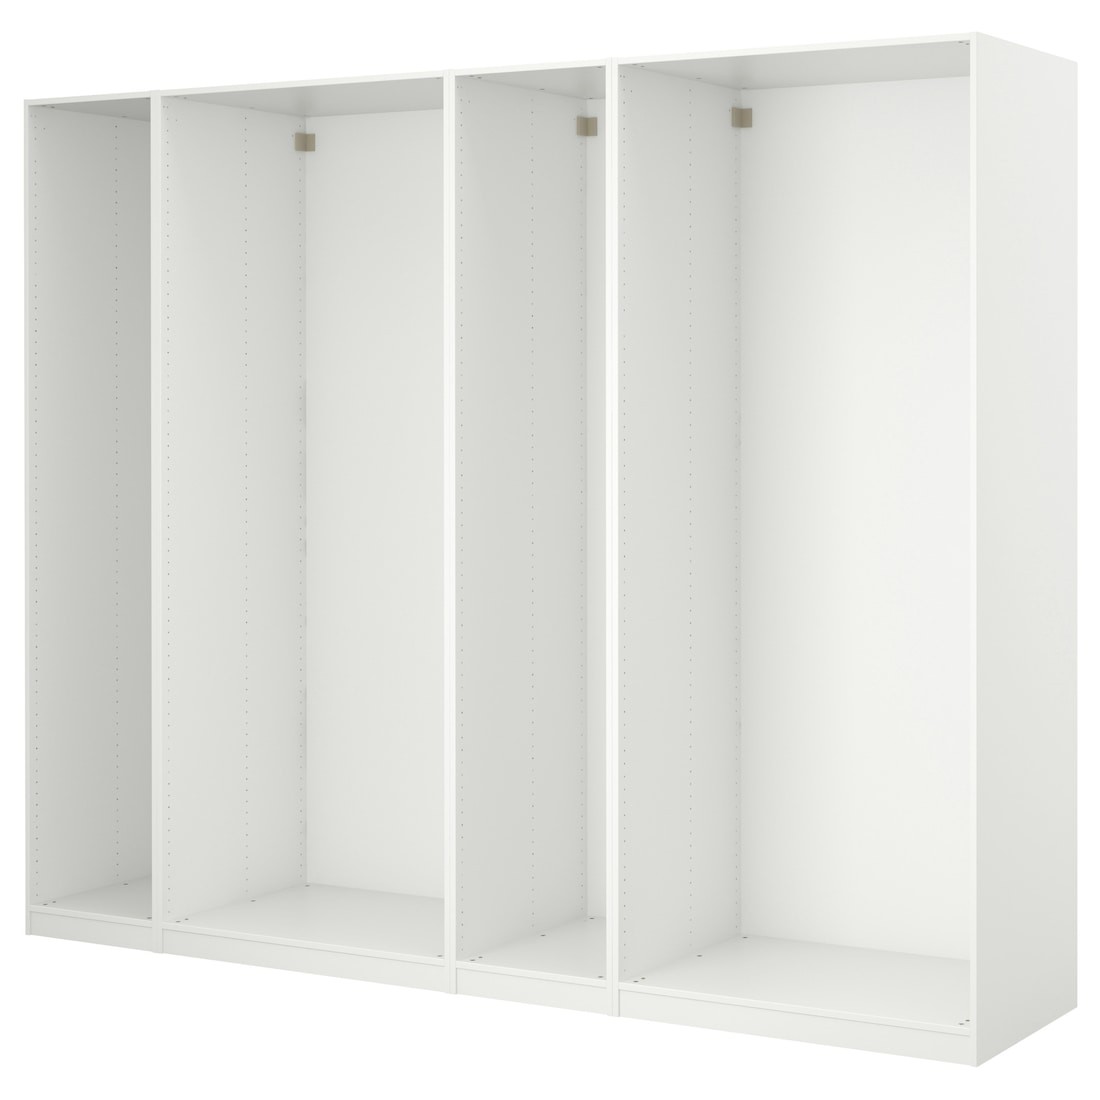 IKEA PAX ПАКС 4 каркаса гардеробов, белый, 250x58x236 см 29895428 | 298.954.28